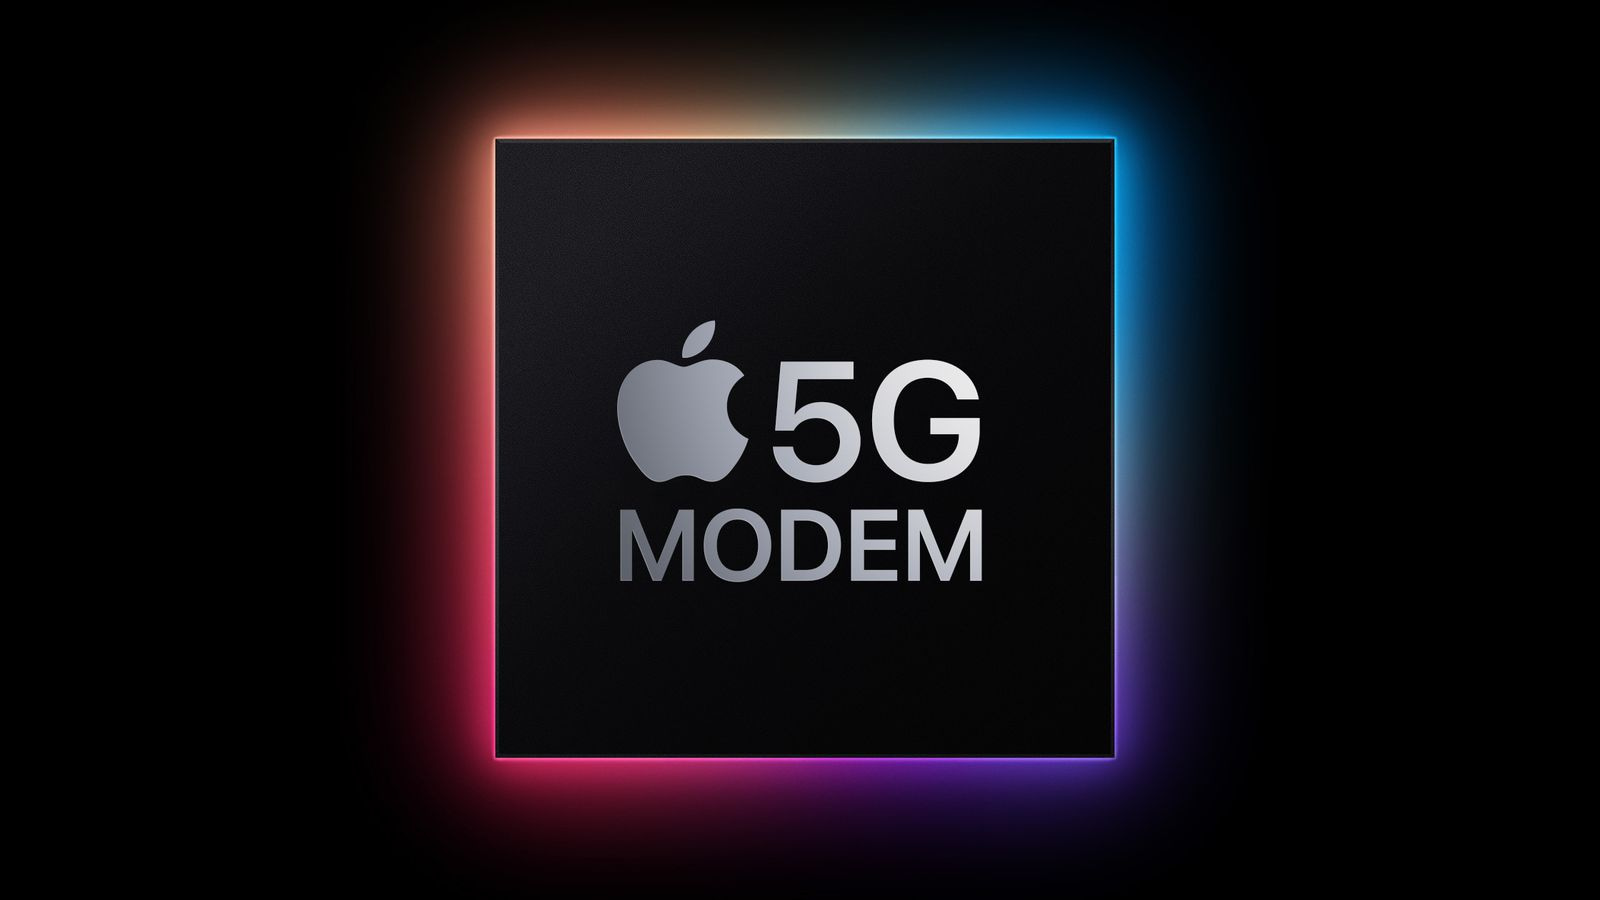 Apple's 5G modems